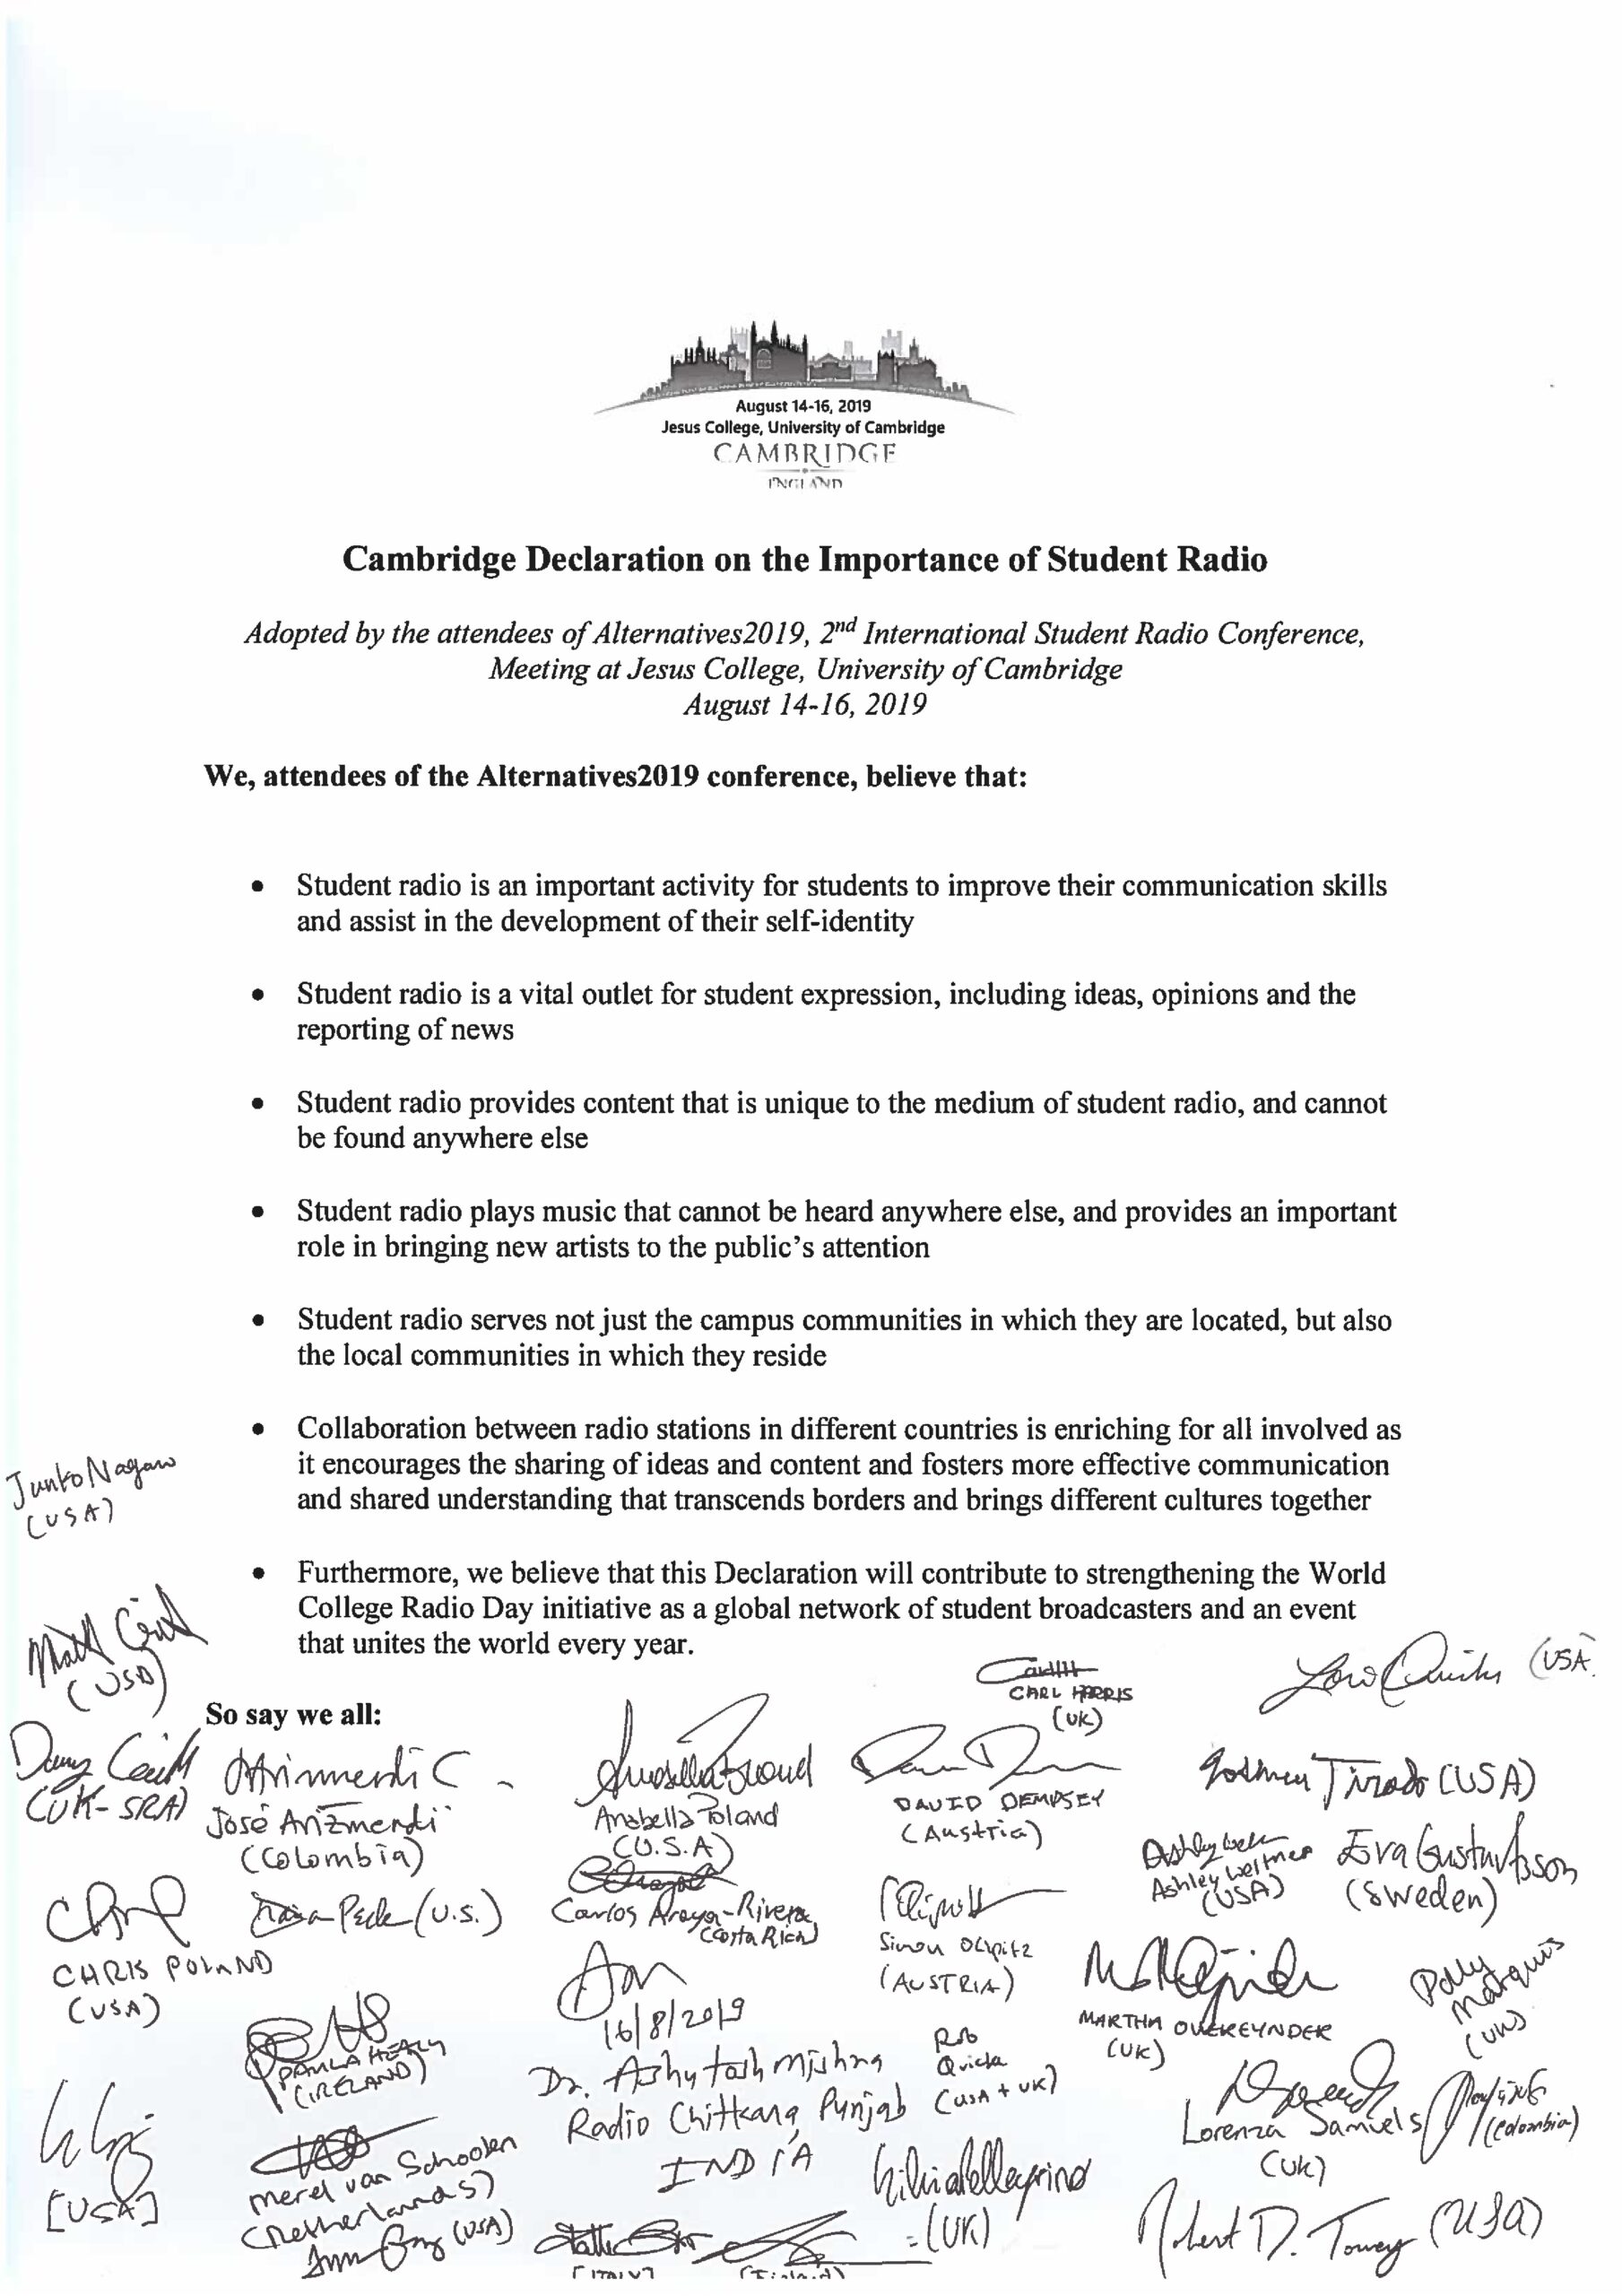 The Cambridge Declaration on the Importance of Student Radio